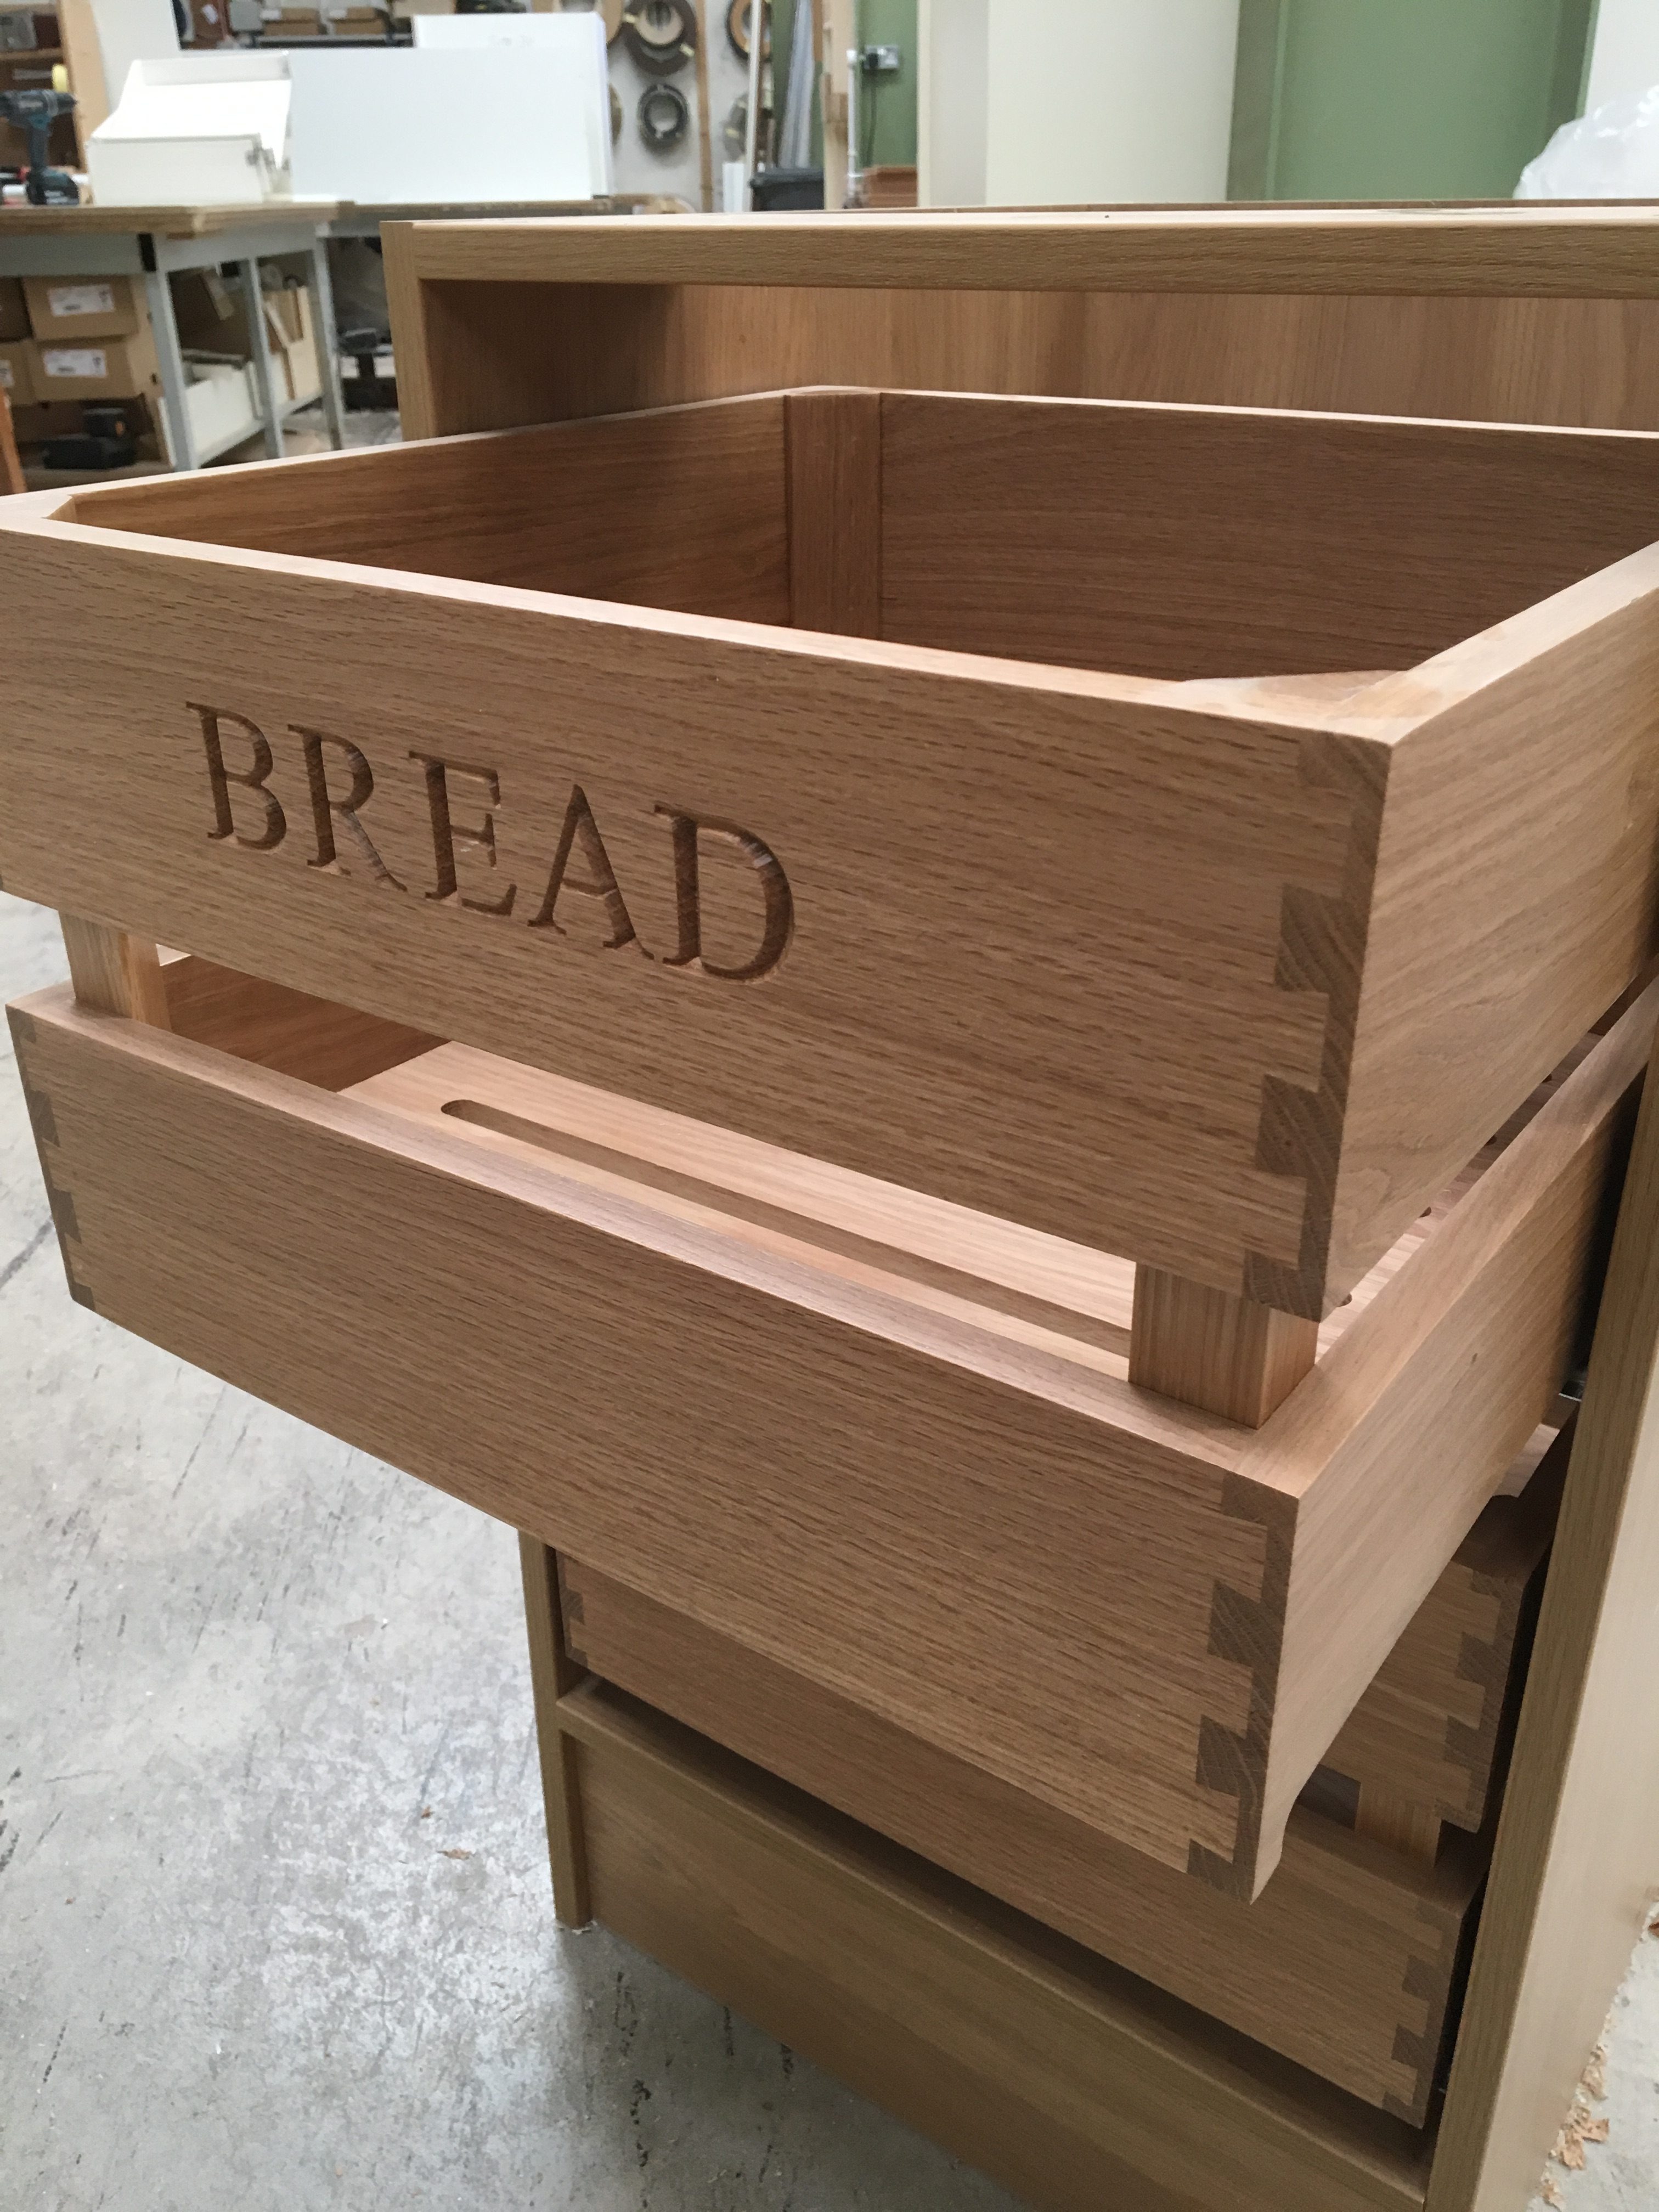 Larder Bread Drawer